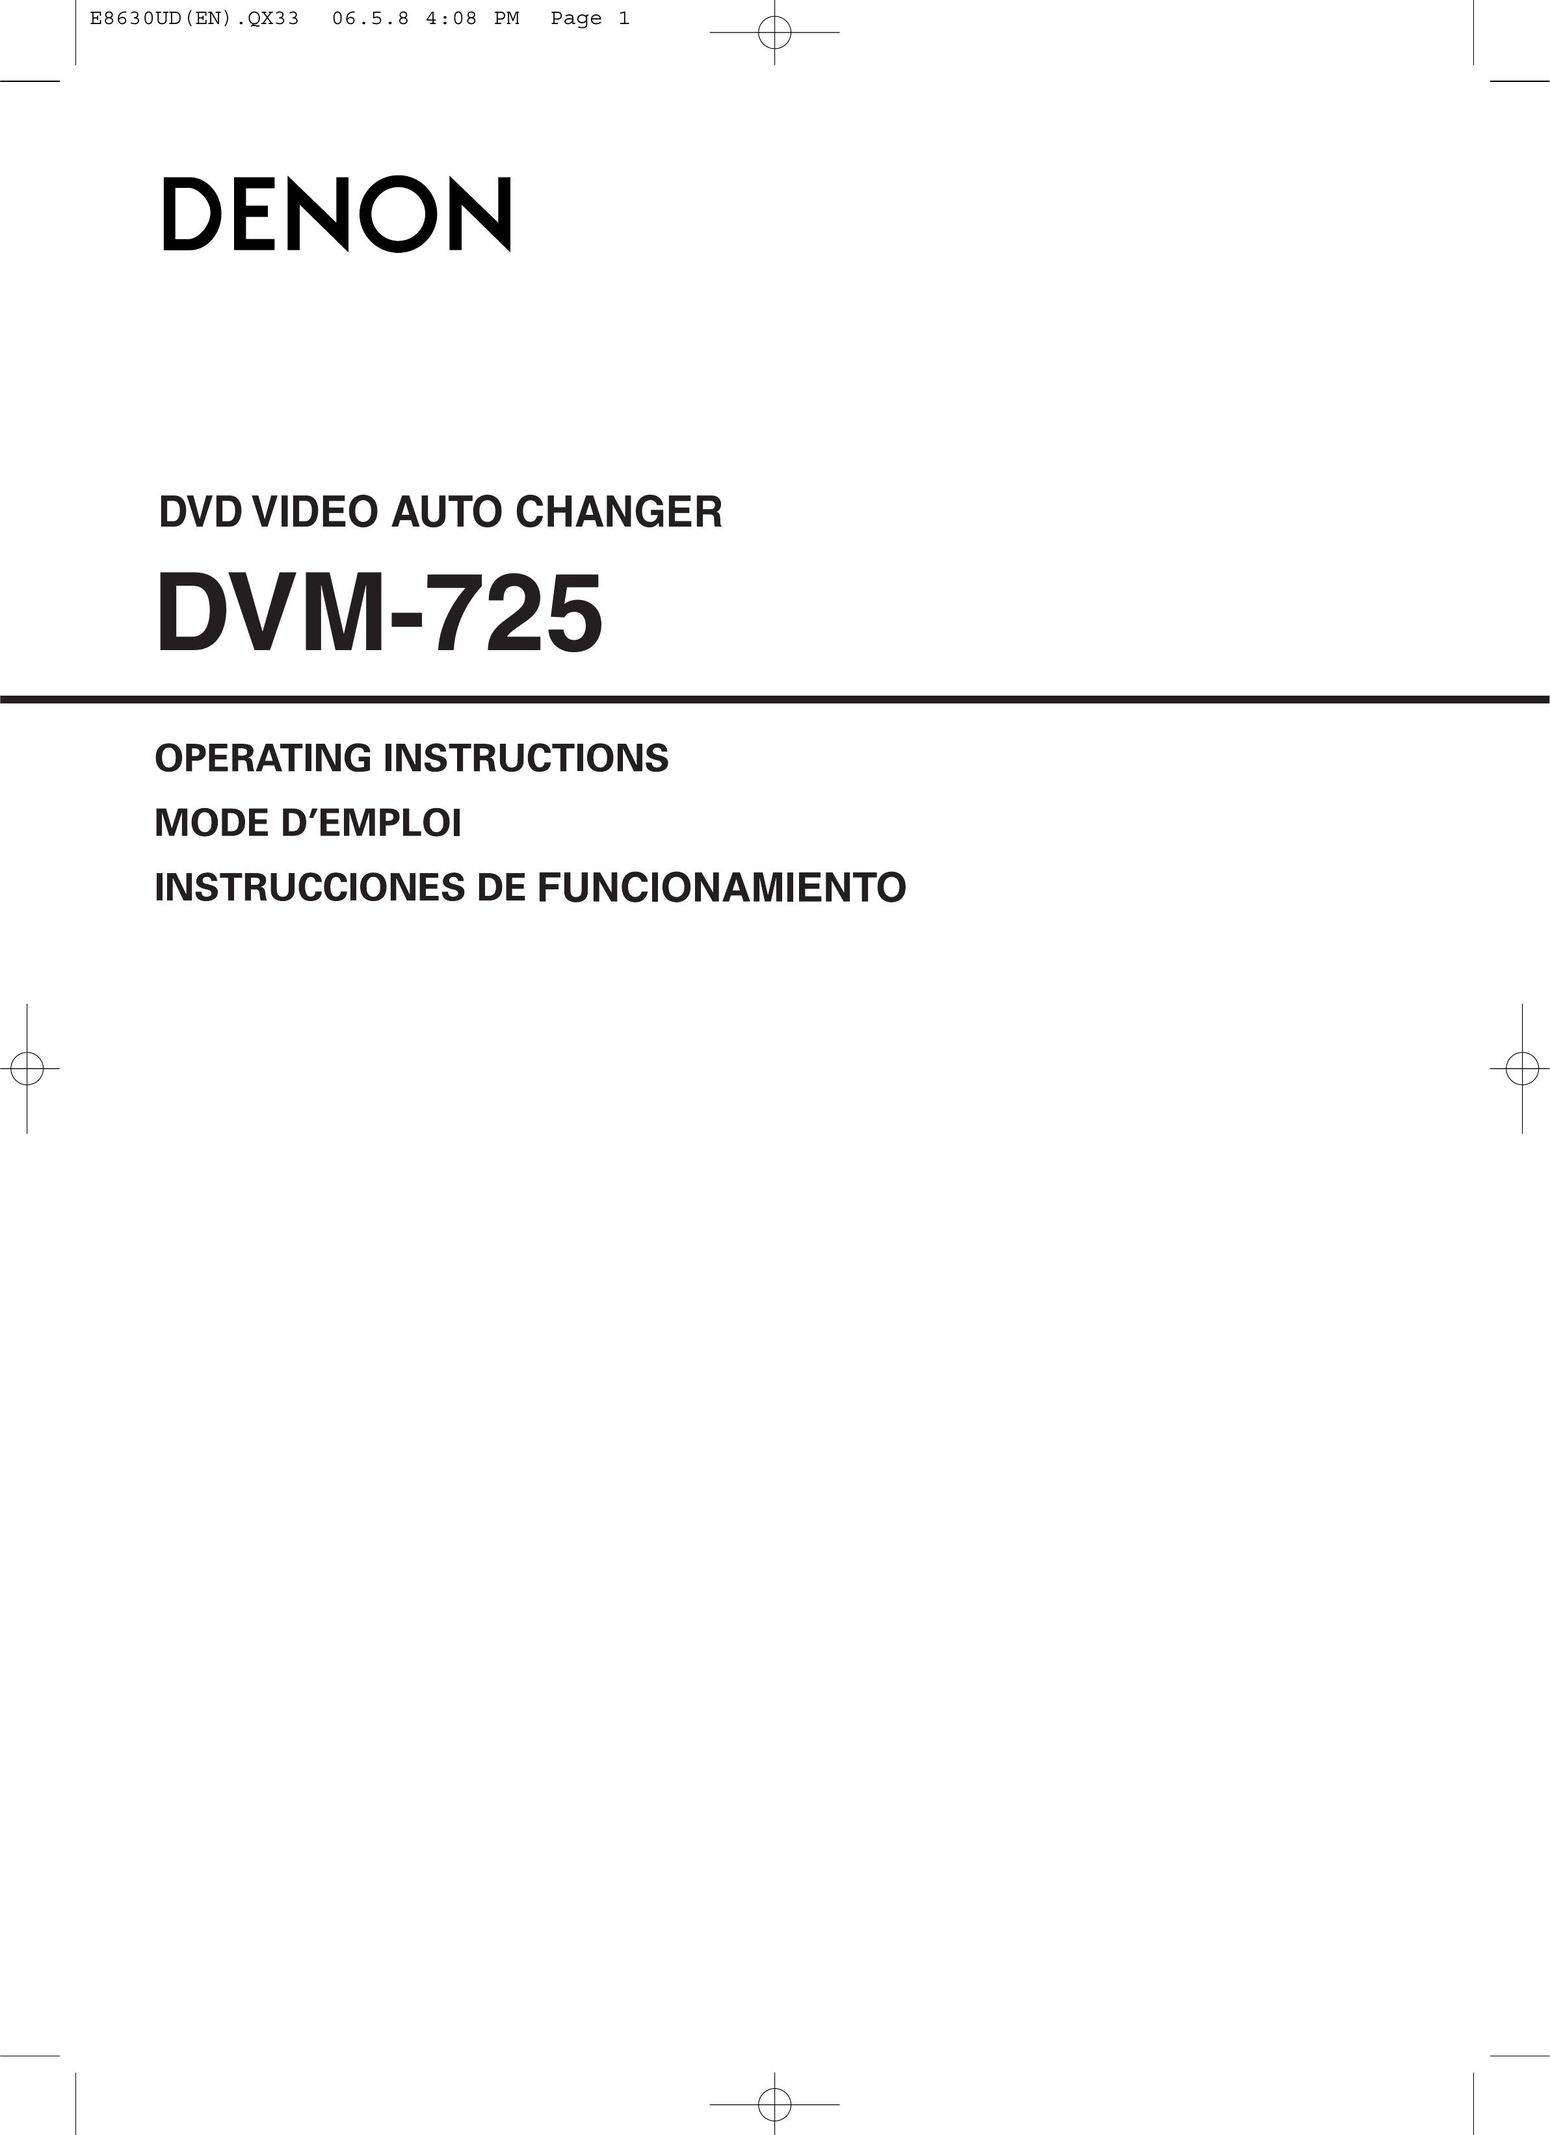 Denon DVM-725 CD Player User Manual